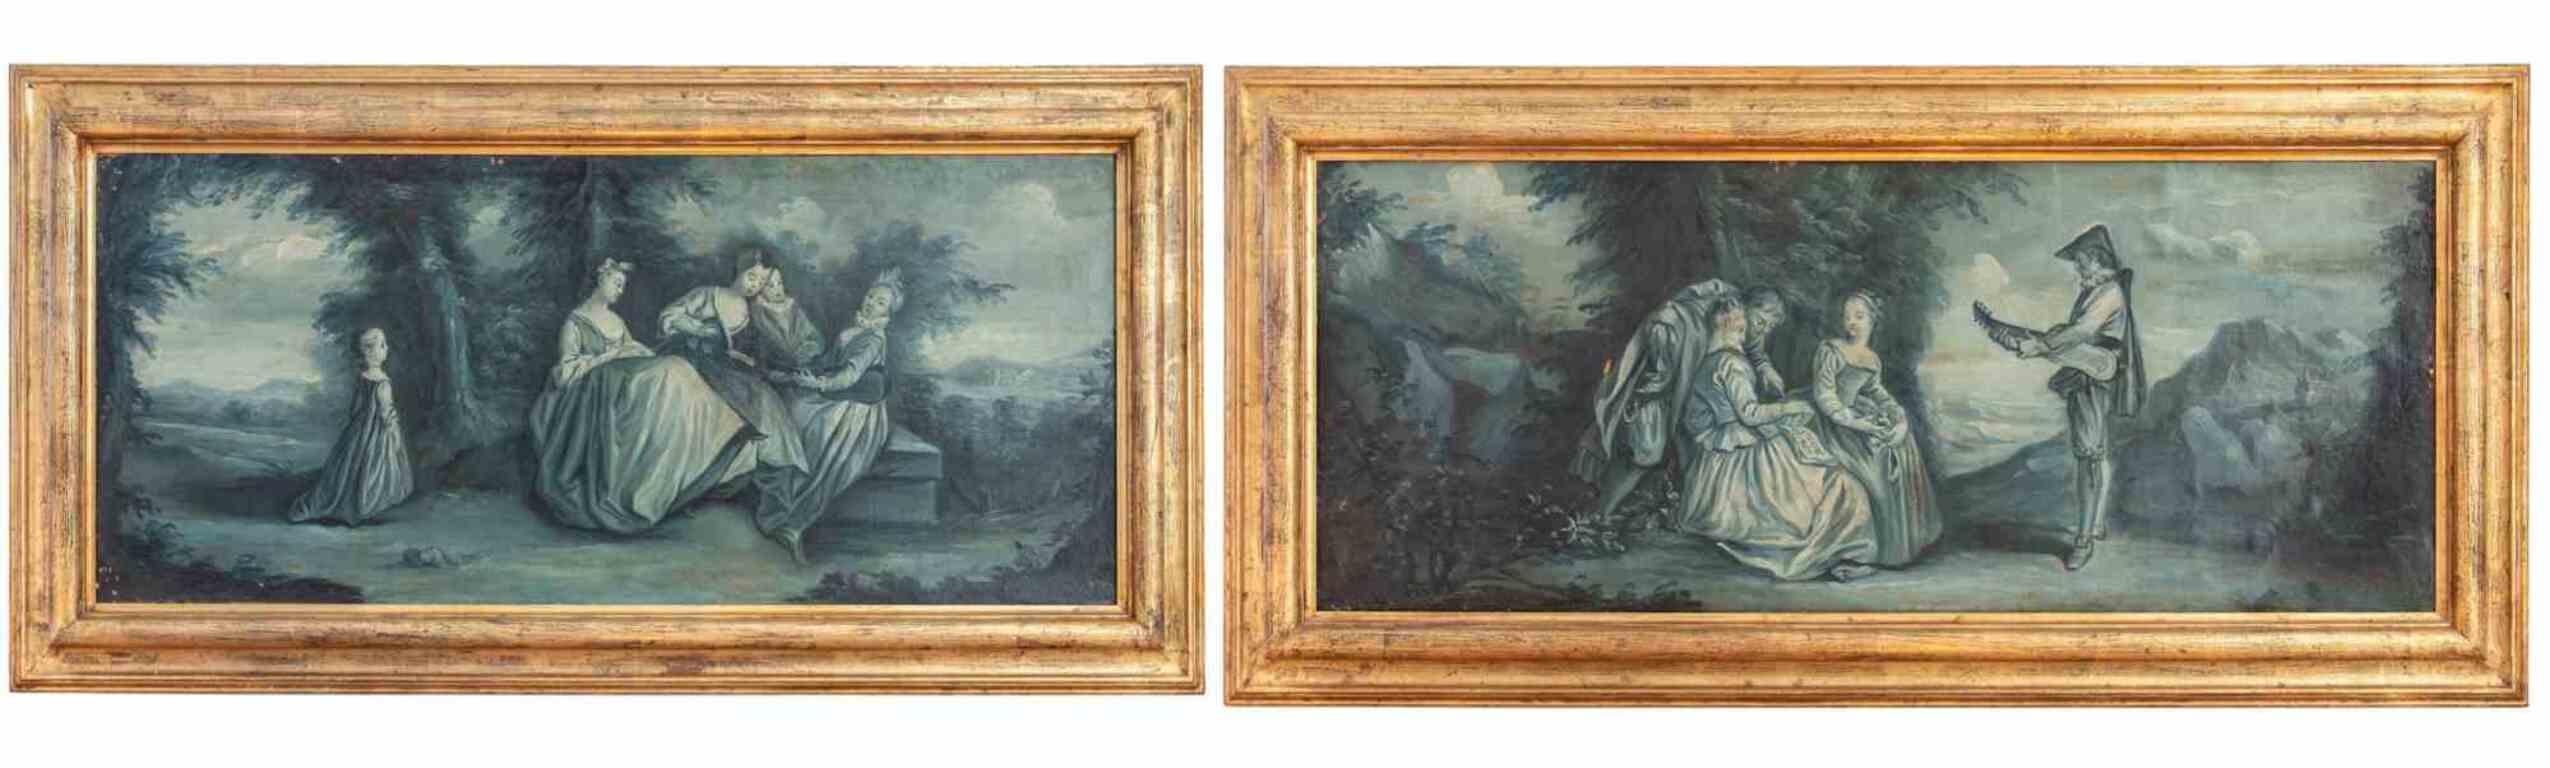 Pair of Gallant Scenes - Oil on Canvas - 18th Century